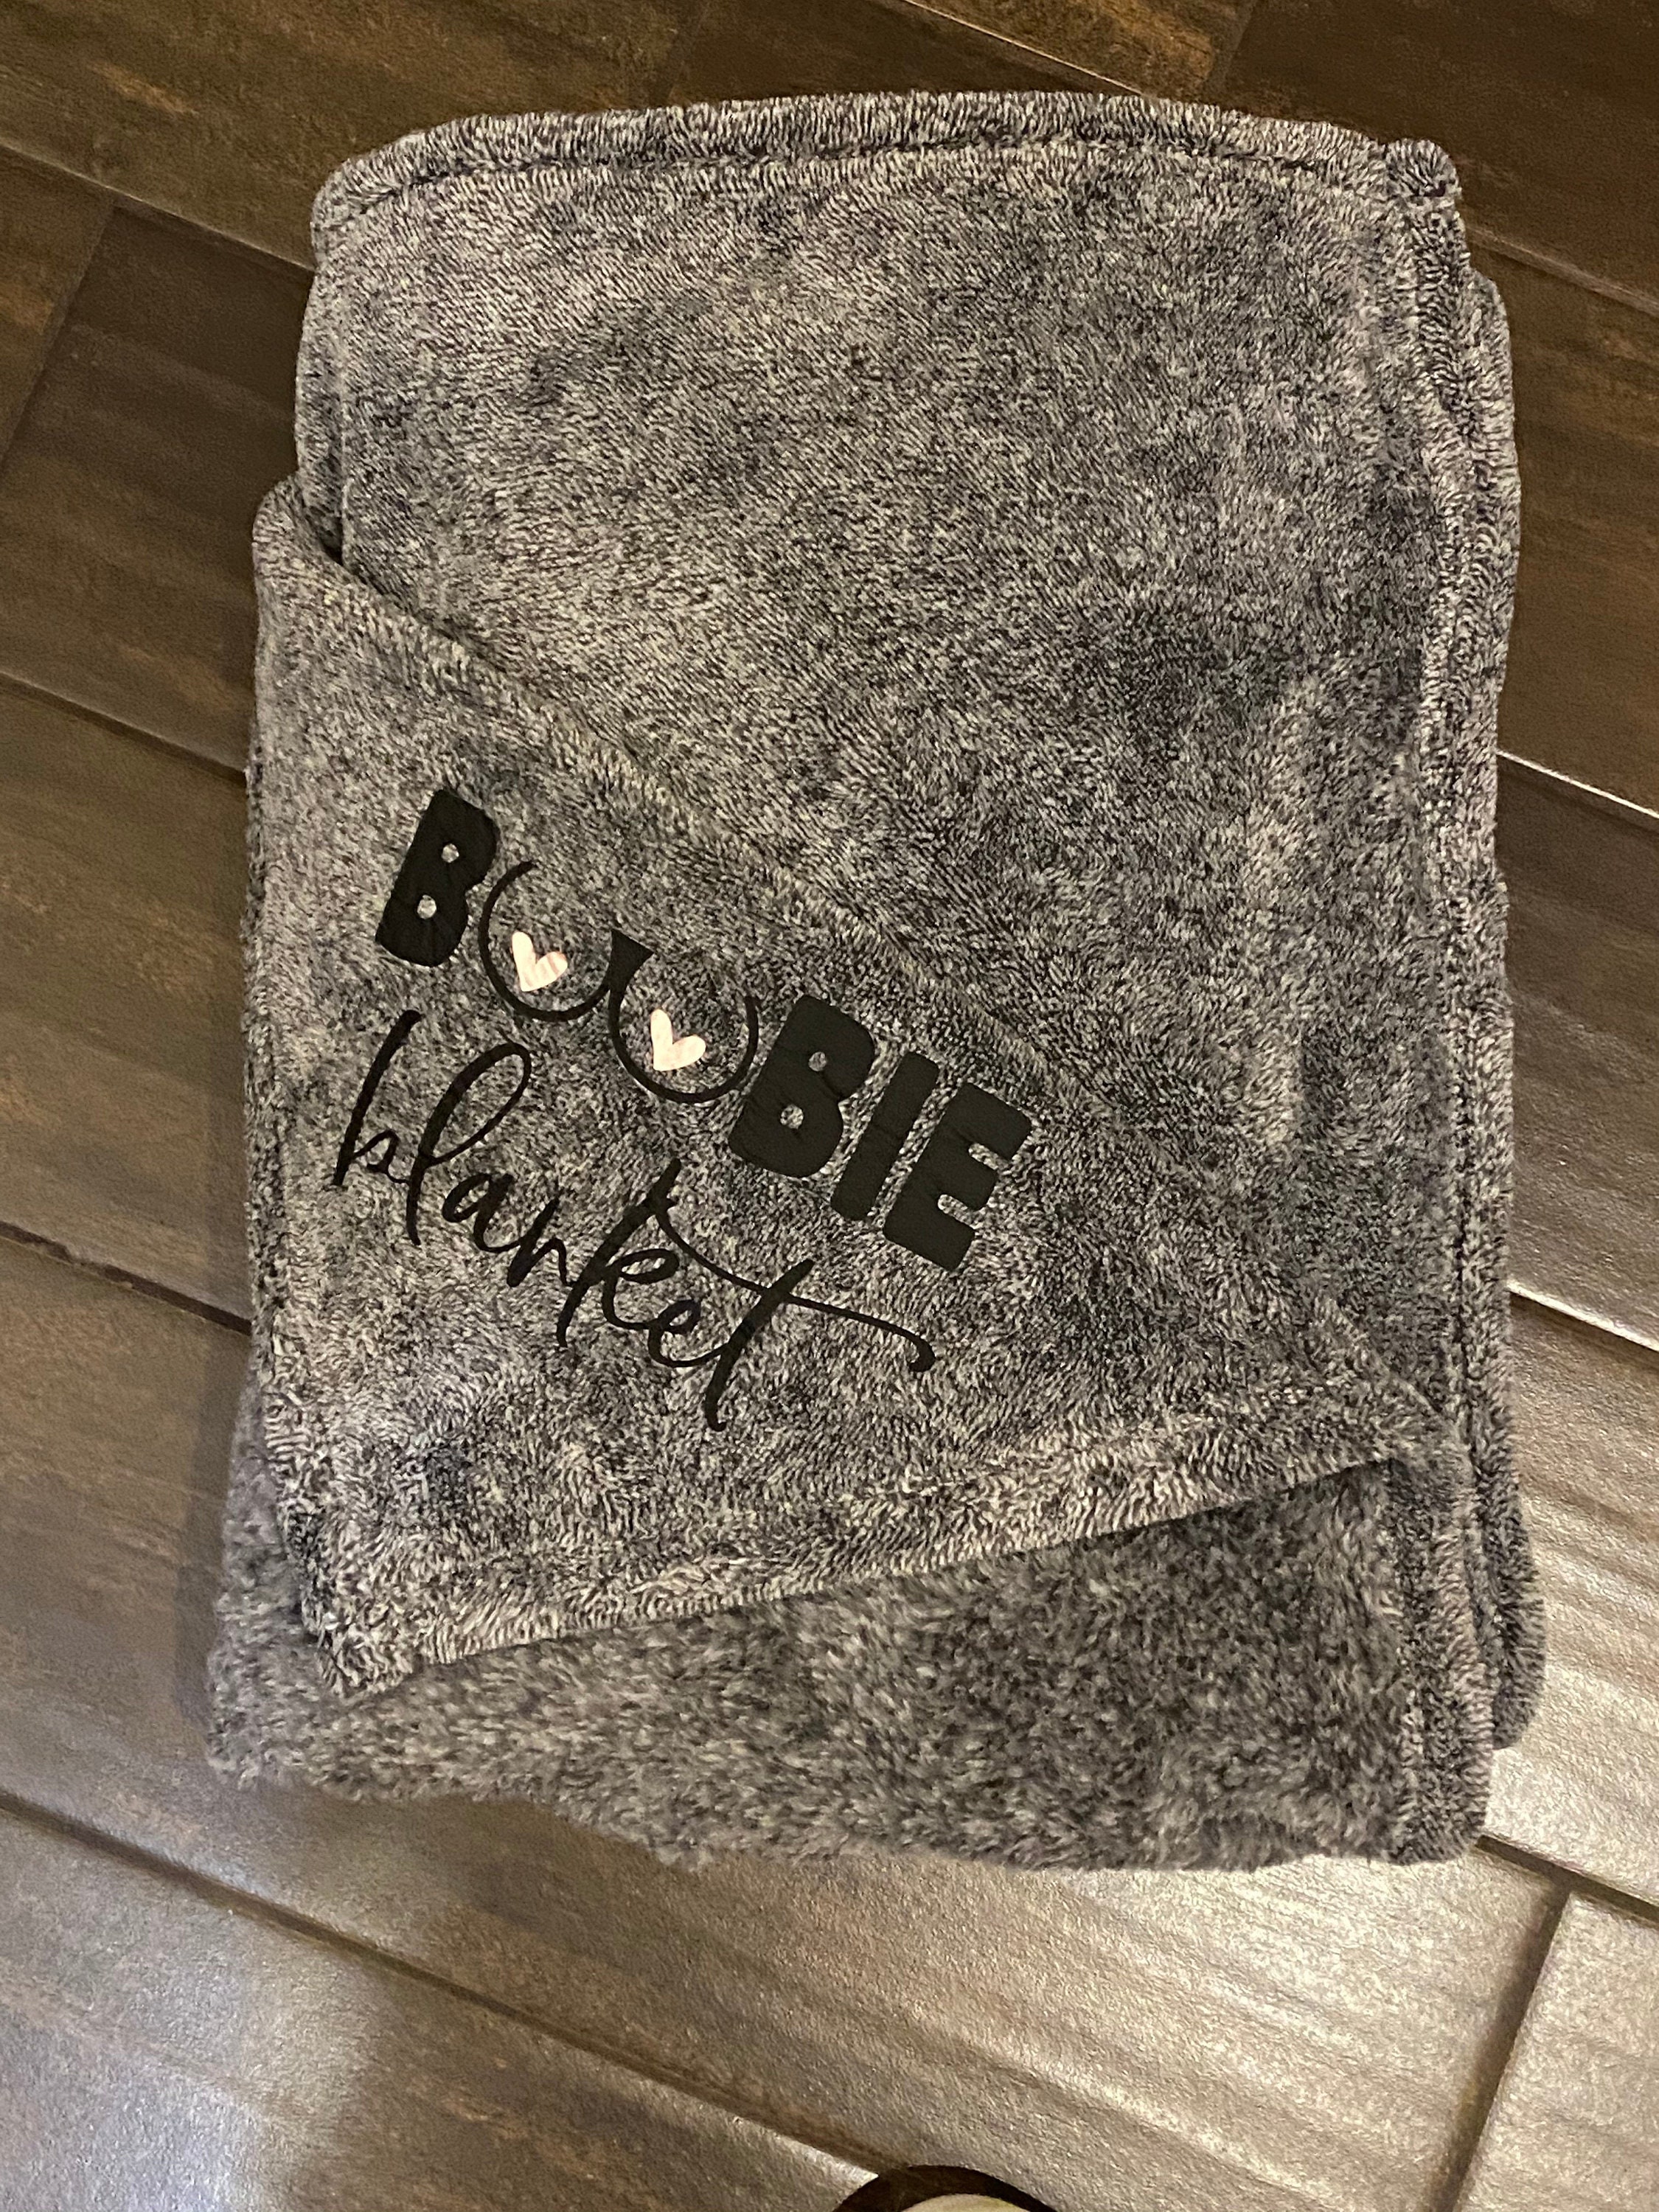 Boobie Blanket, bye bye boobies